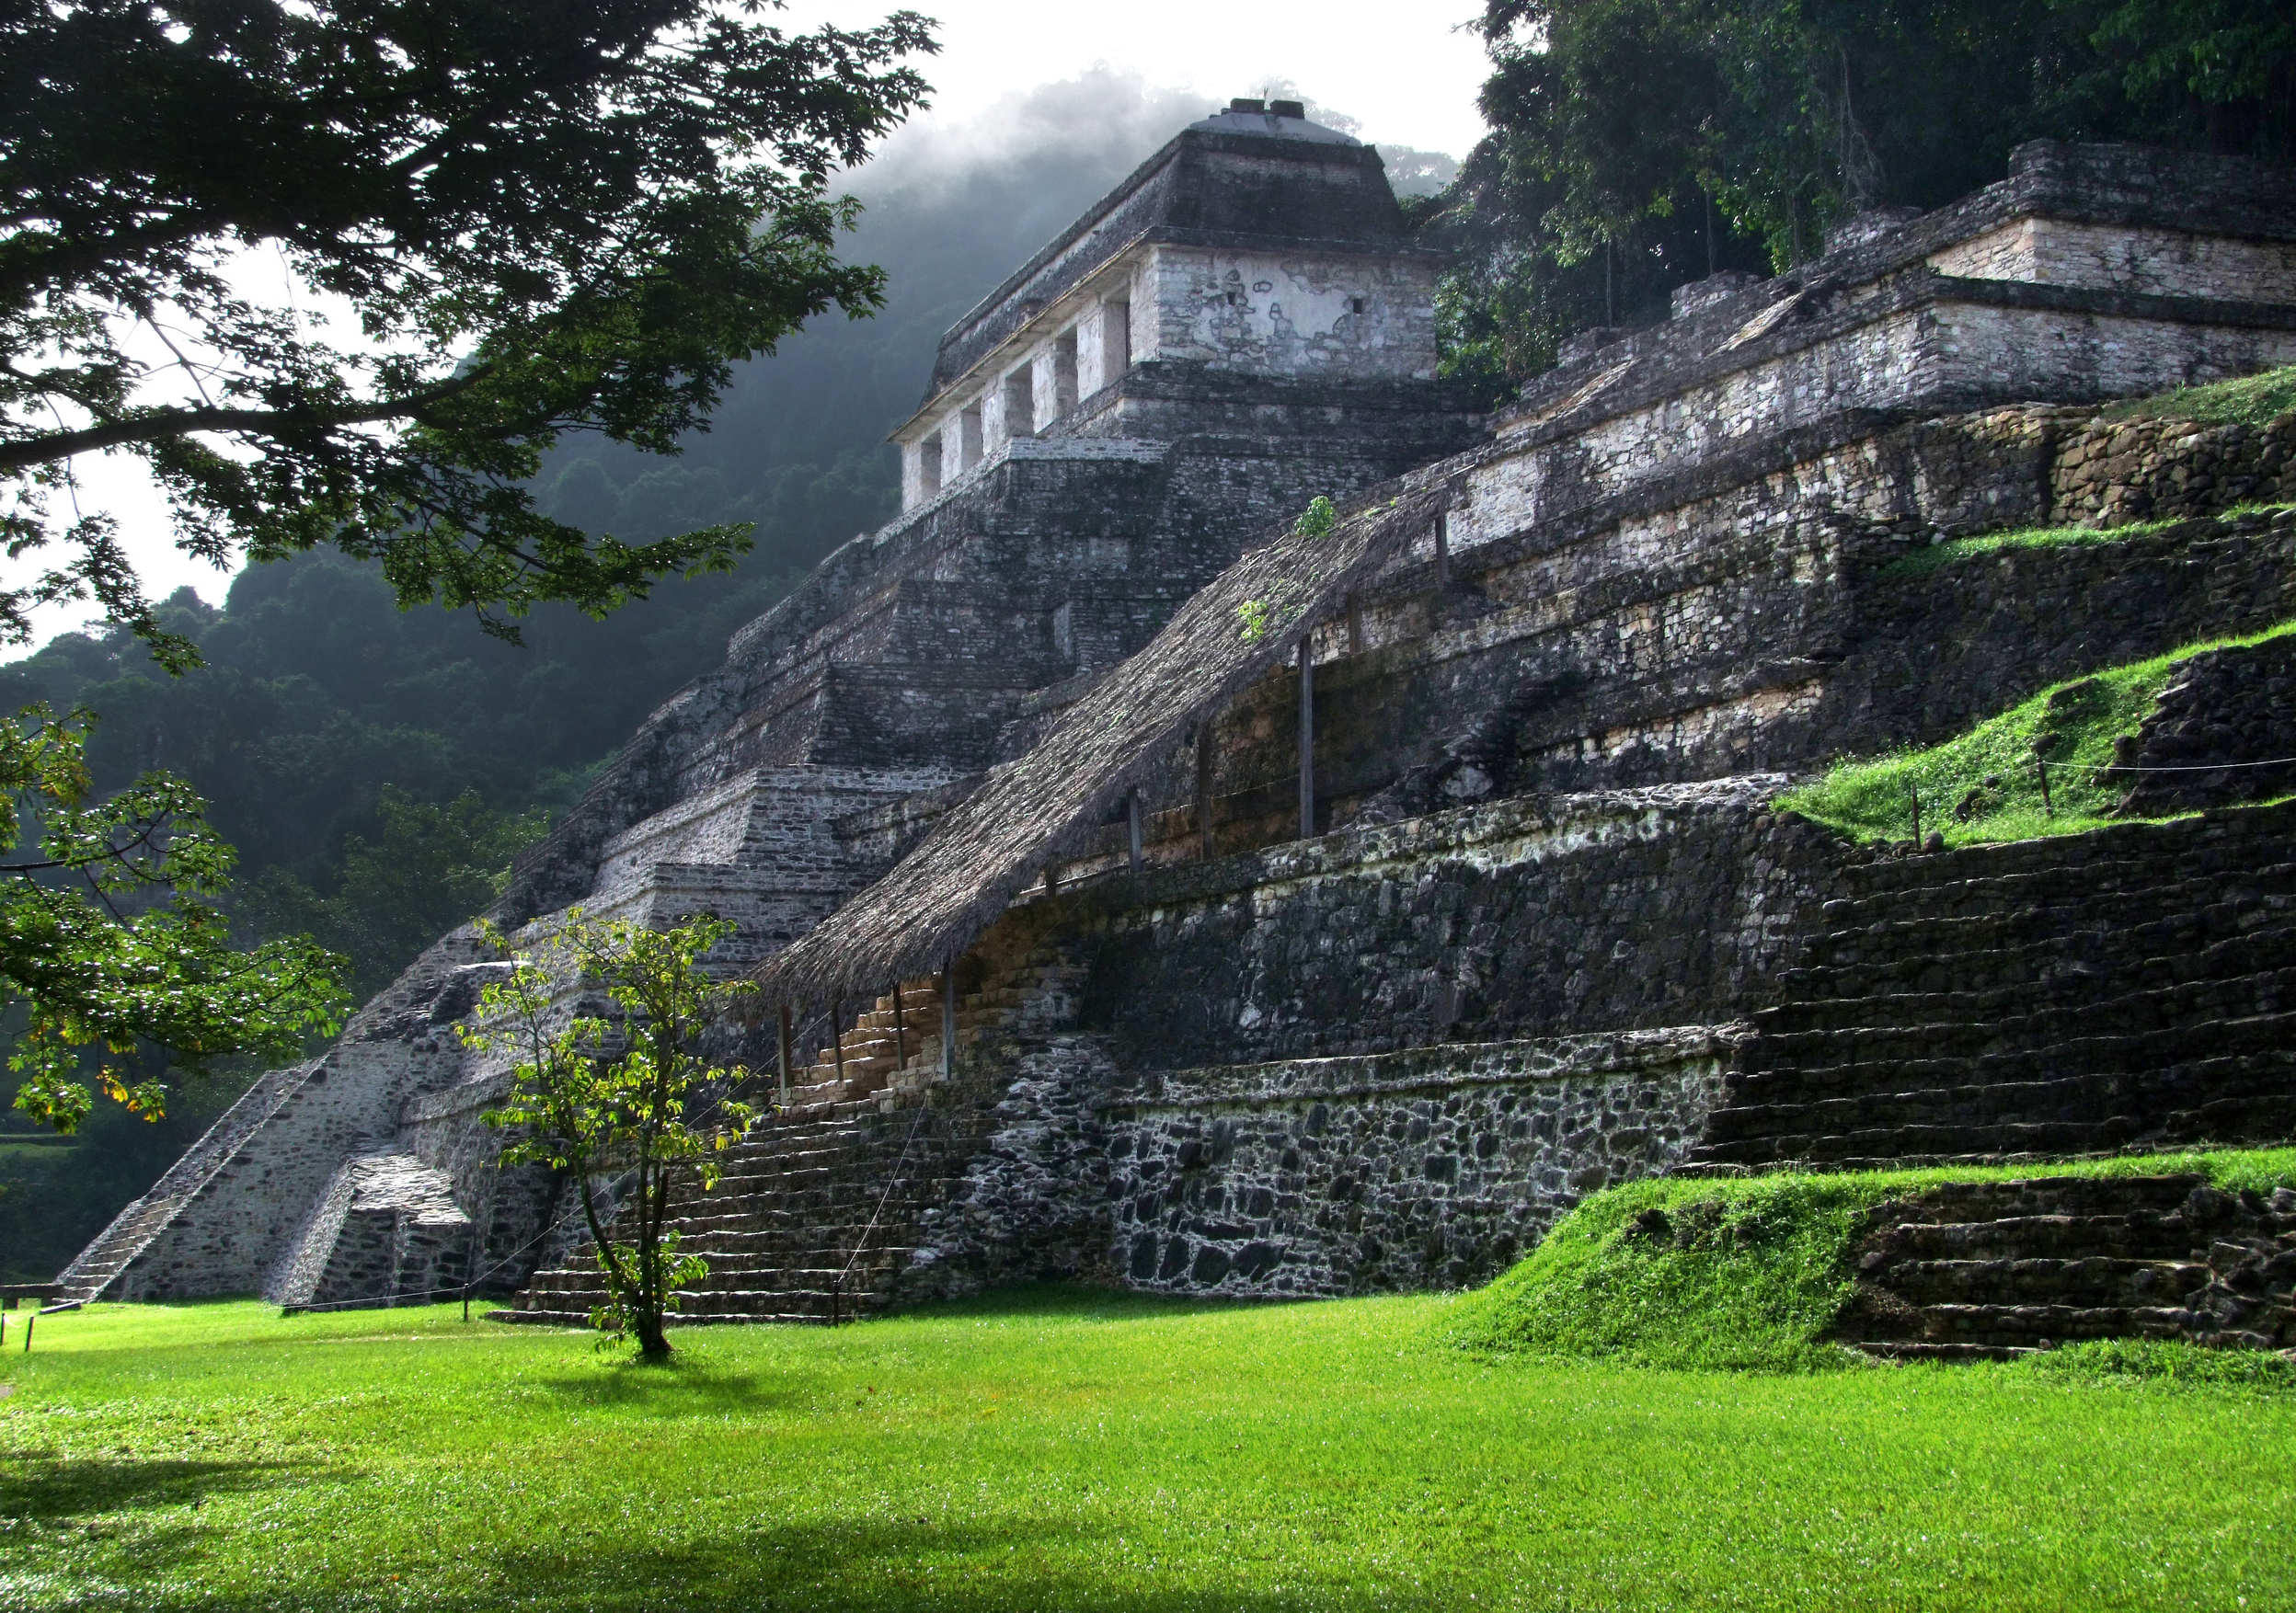 Palenque, Chiapas, Mexico